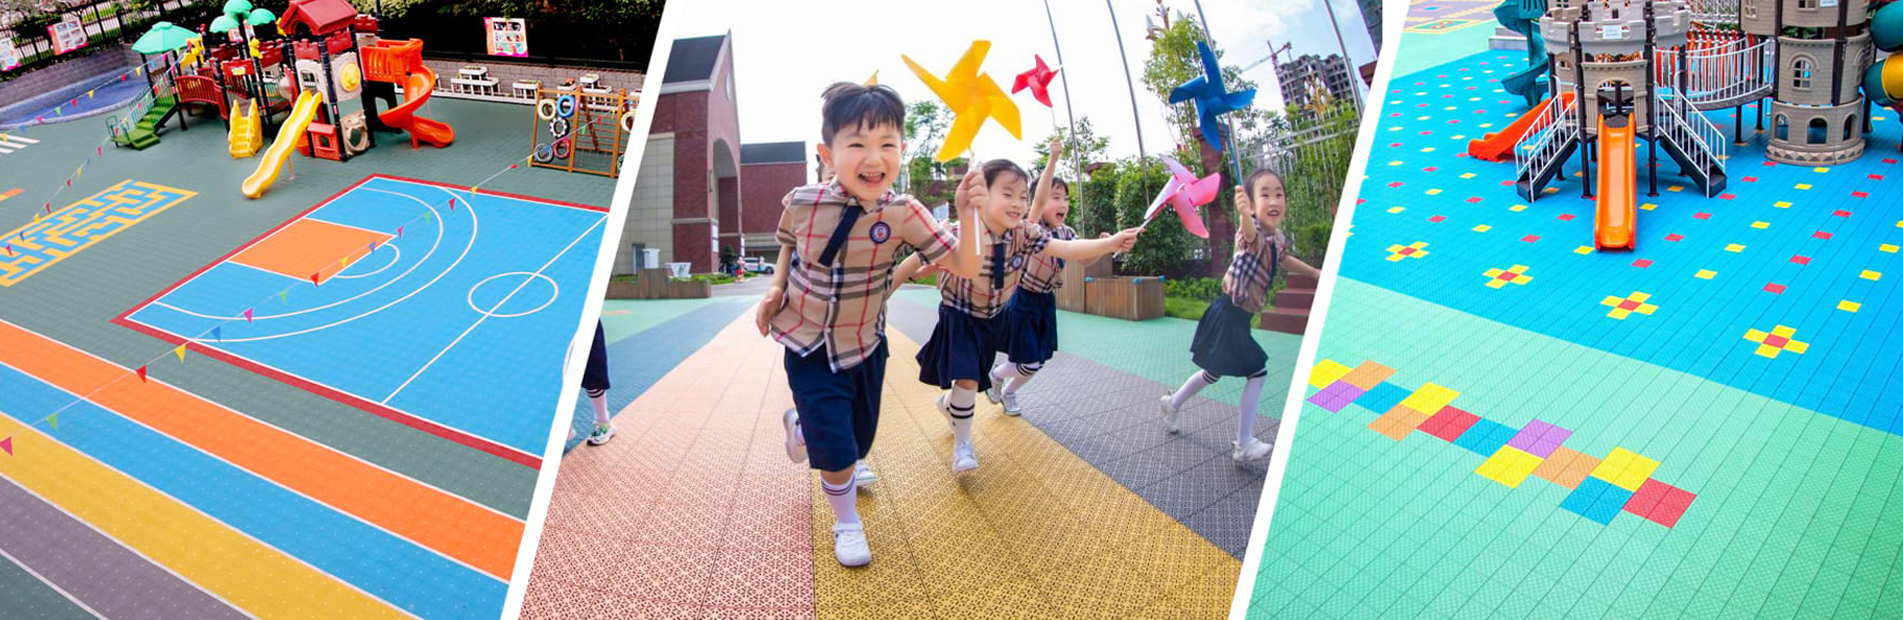 make kids playground's kingergarten flooring